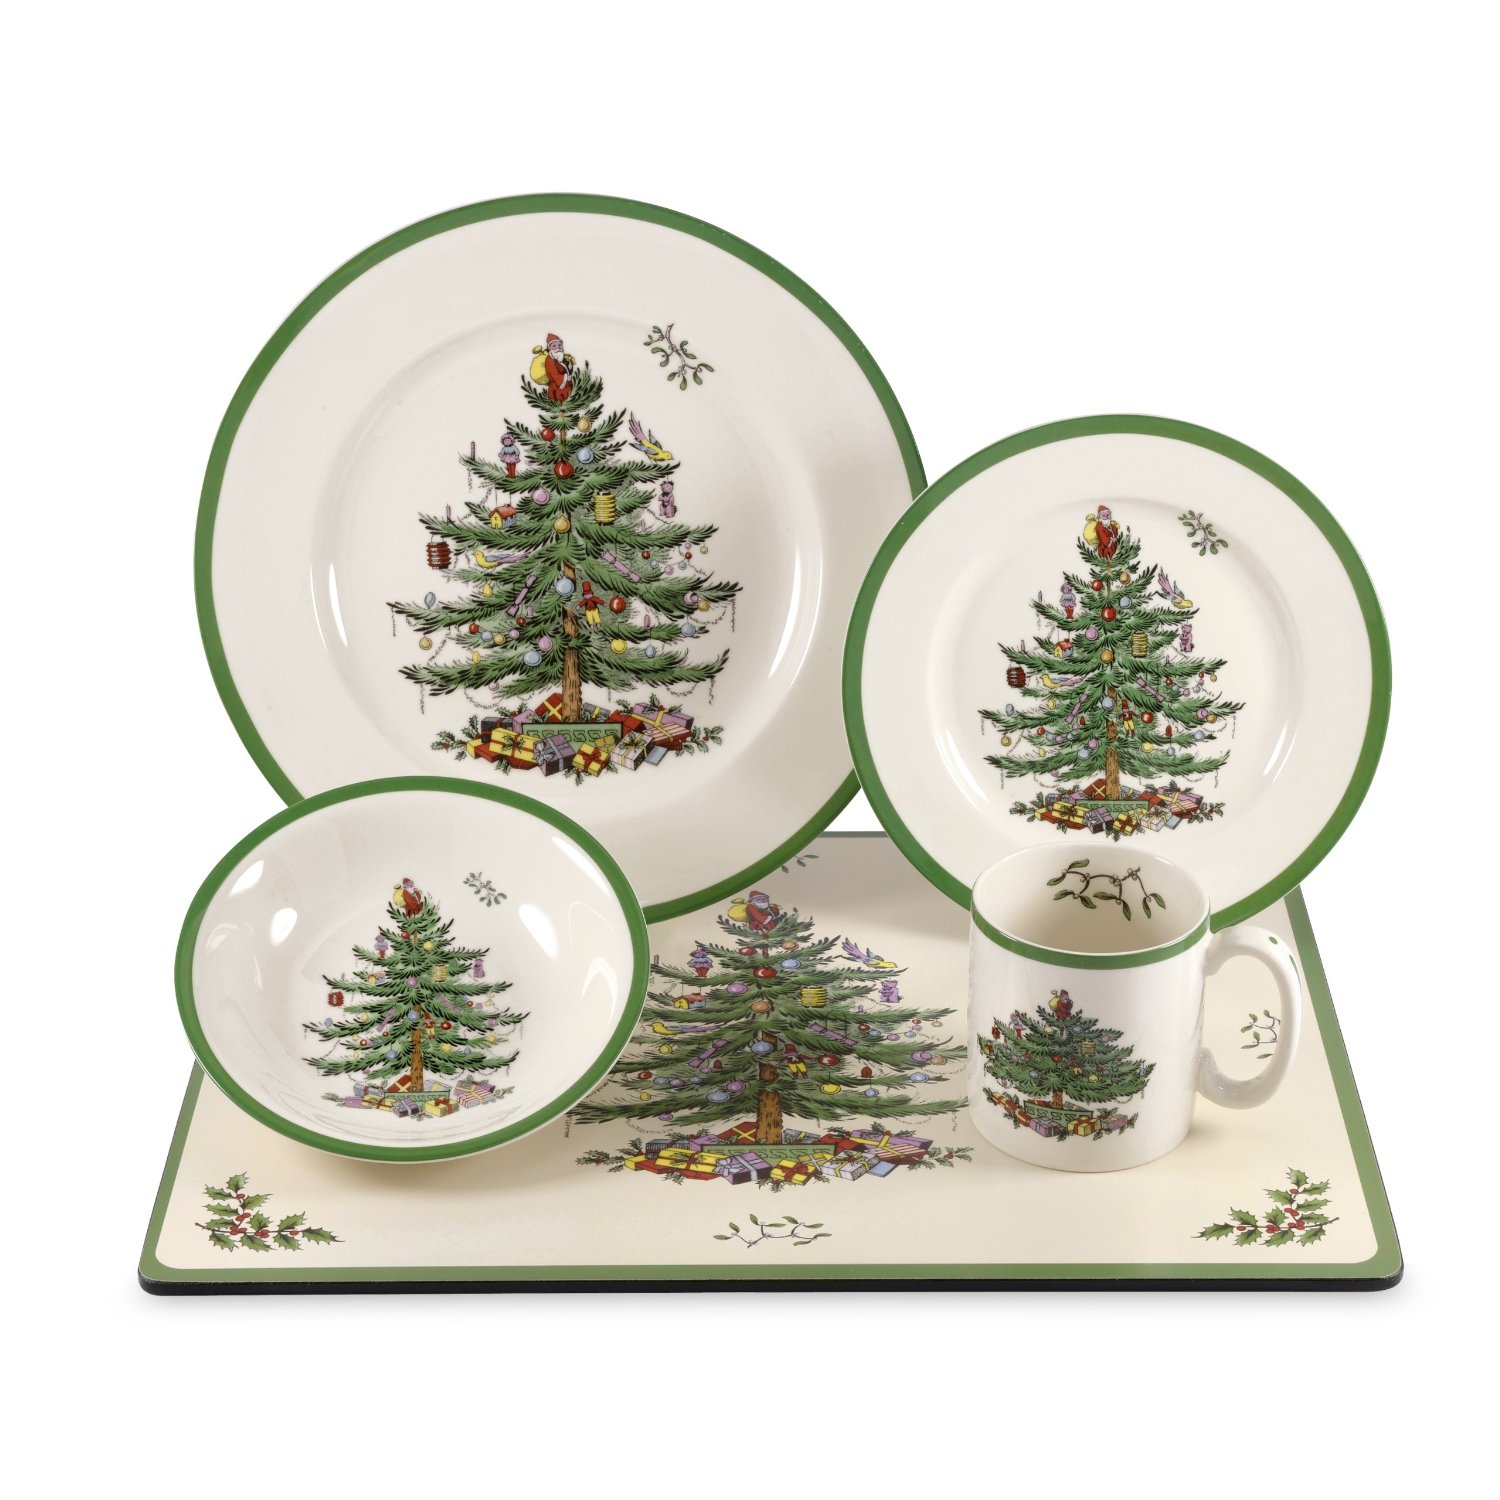 Hot Deal: Spode Christmas Tree Dinnerware 60% Off!